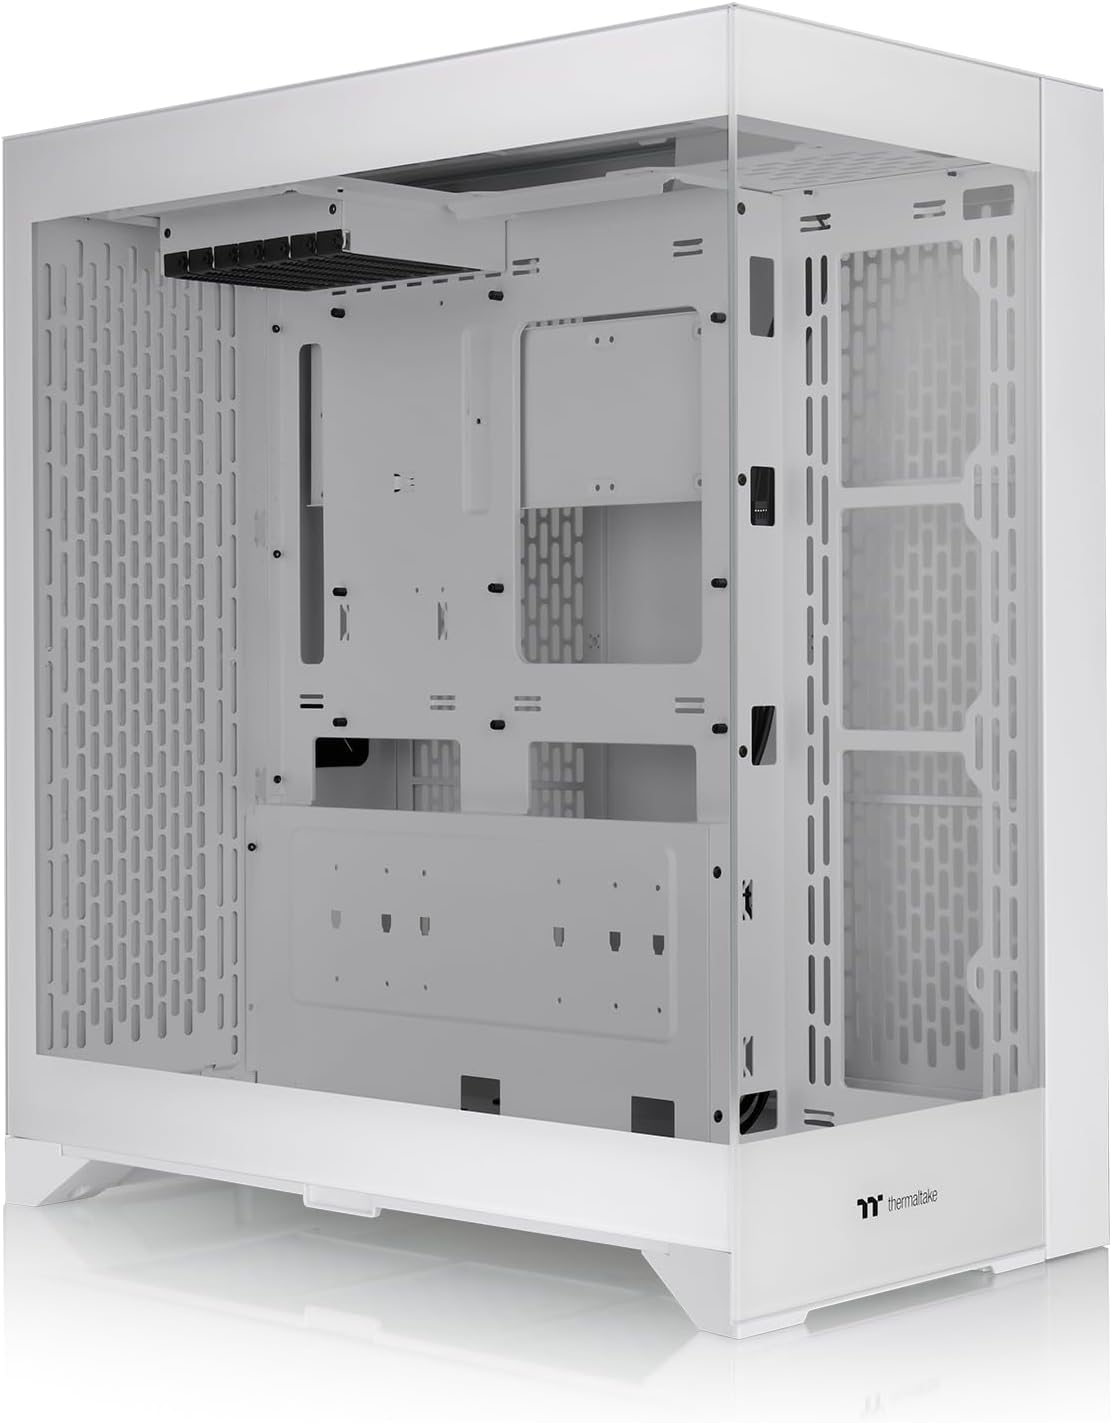 Thermaltake CTE E600 MX Midi Tower PC Case Bianco